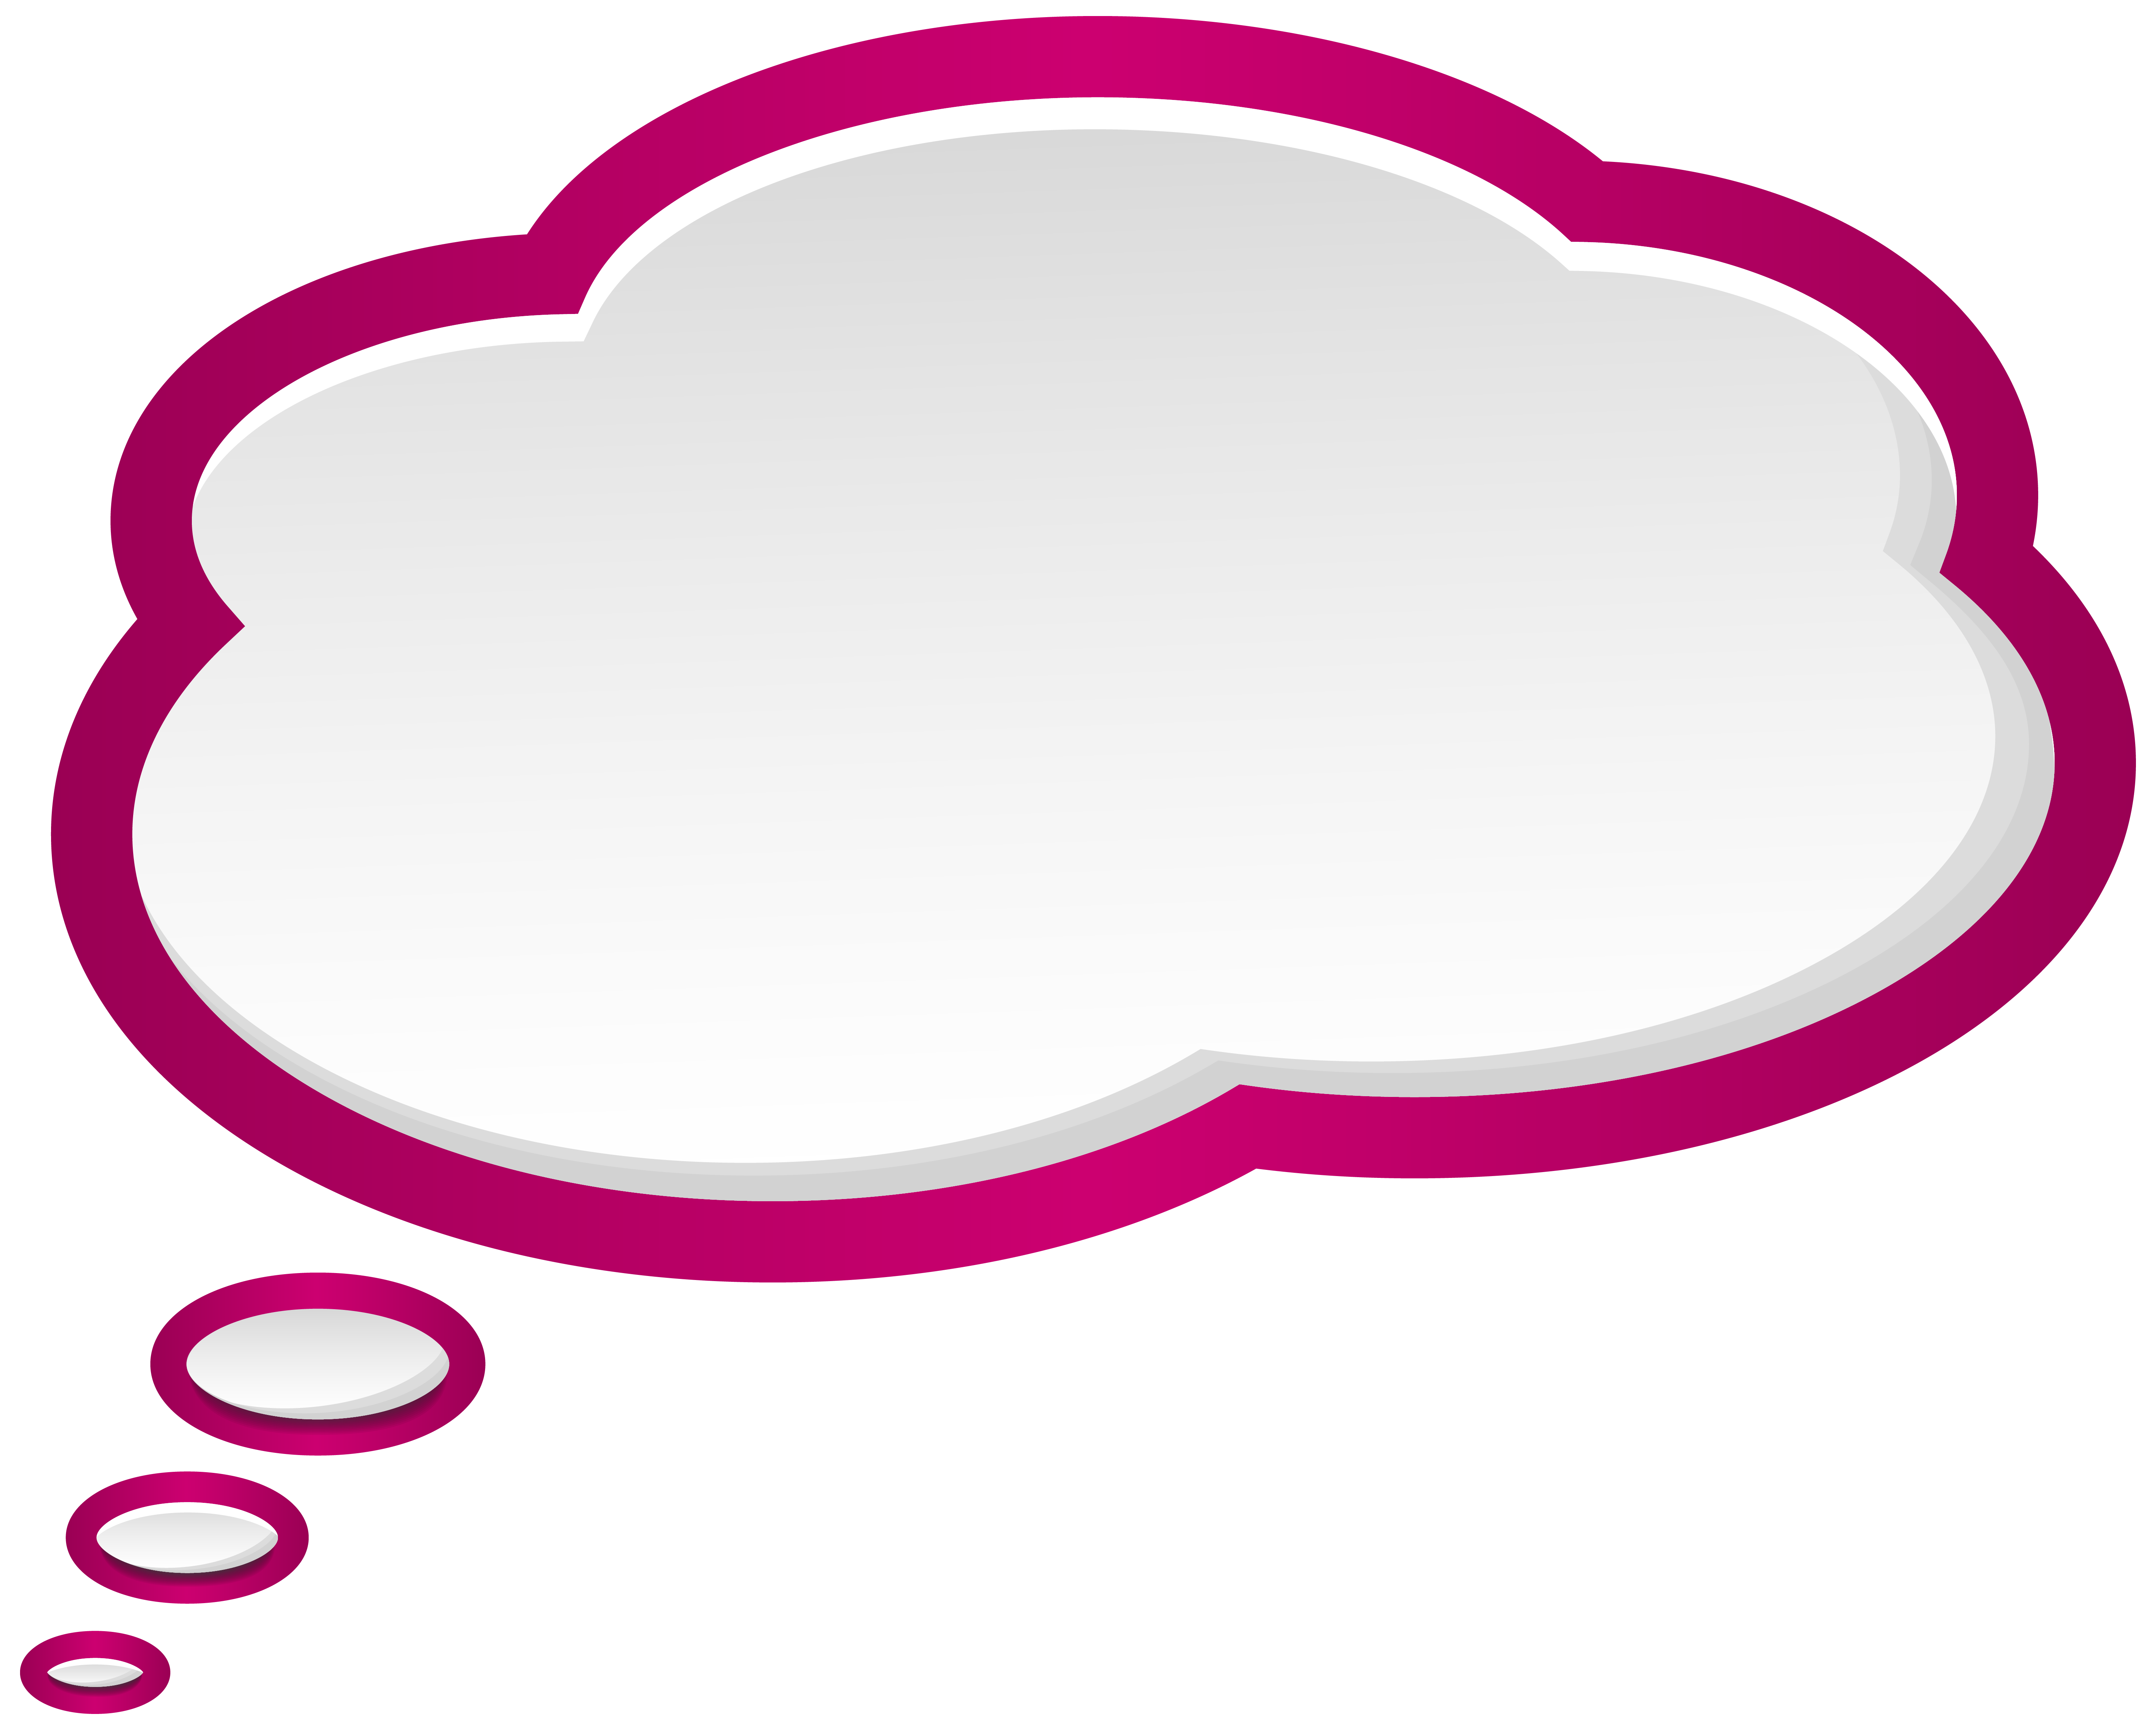 Bubble Speech Pink White PNG Clip Art Image